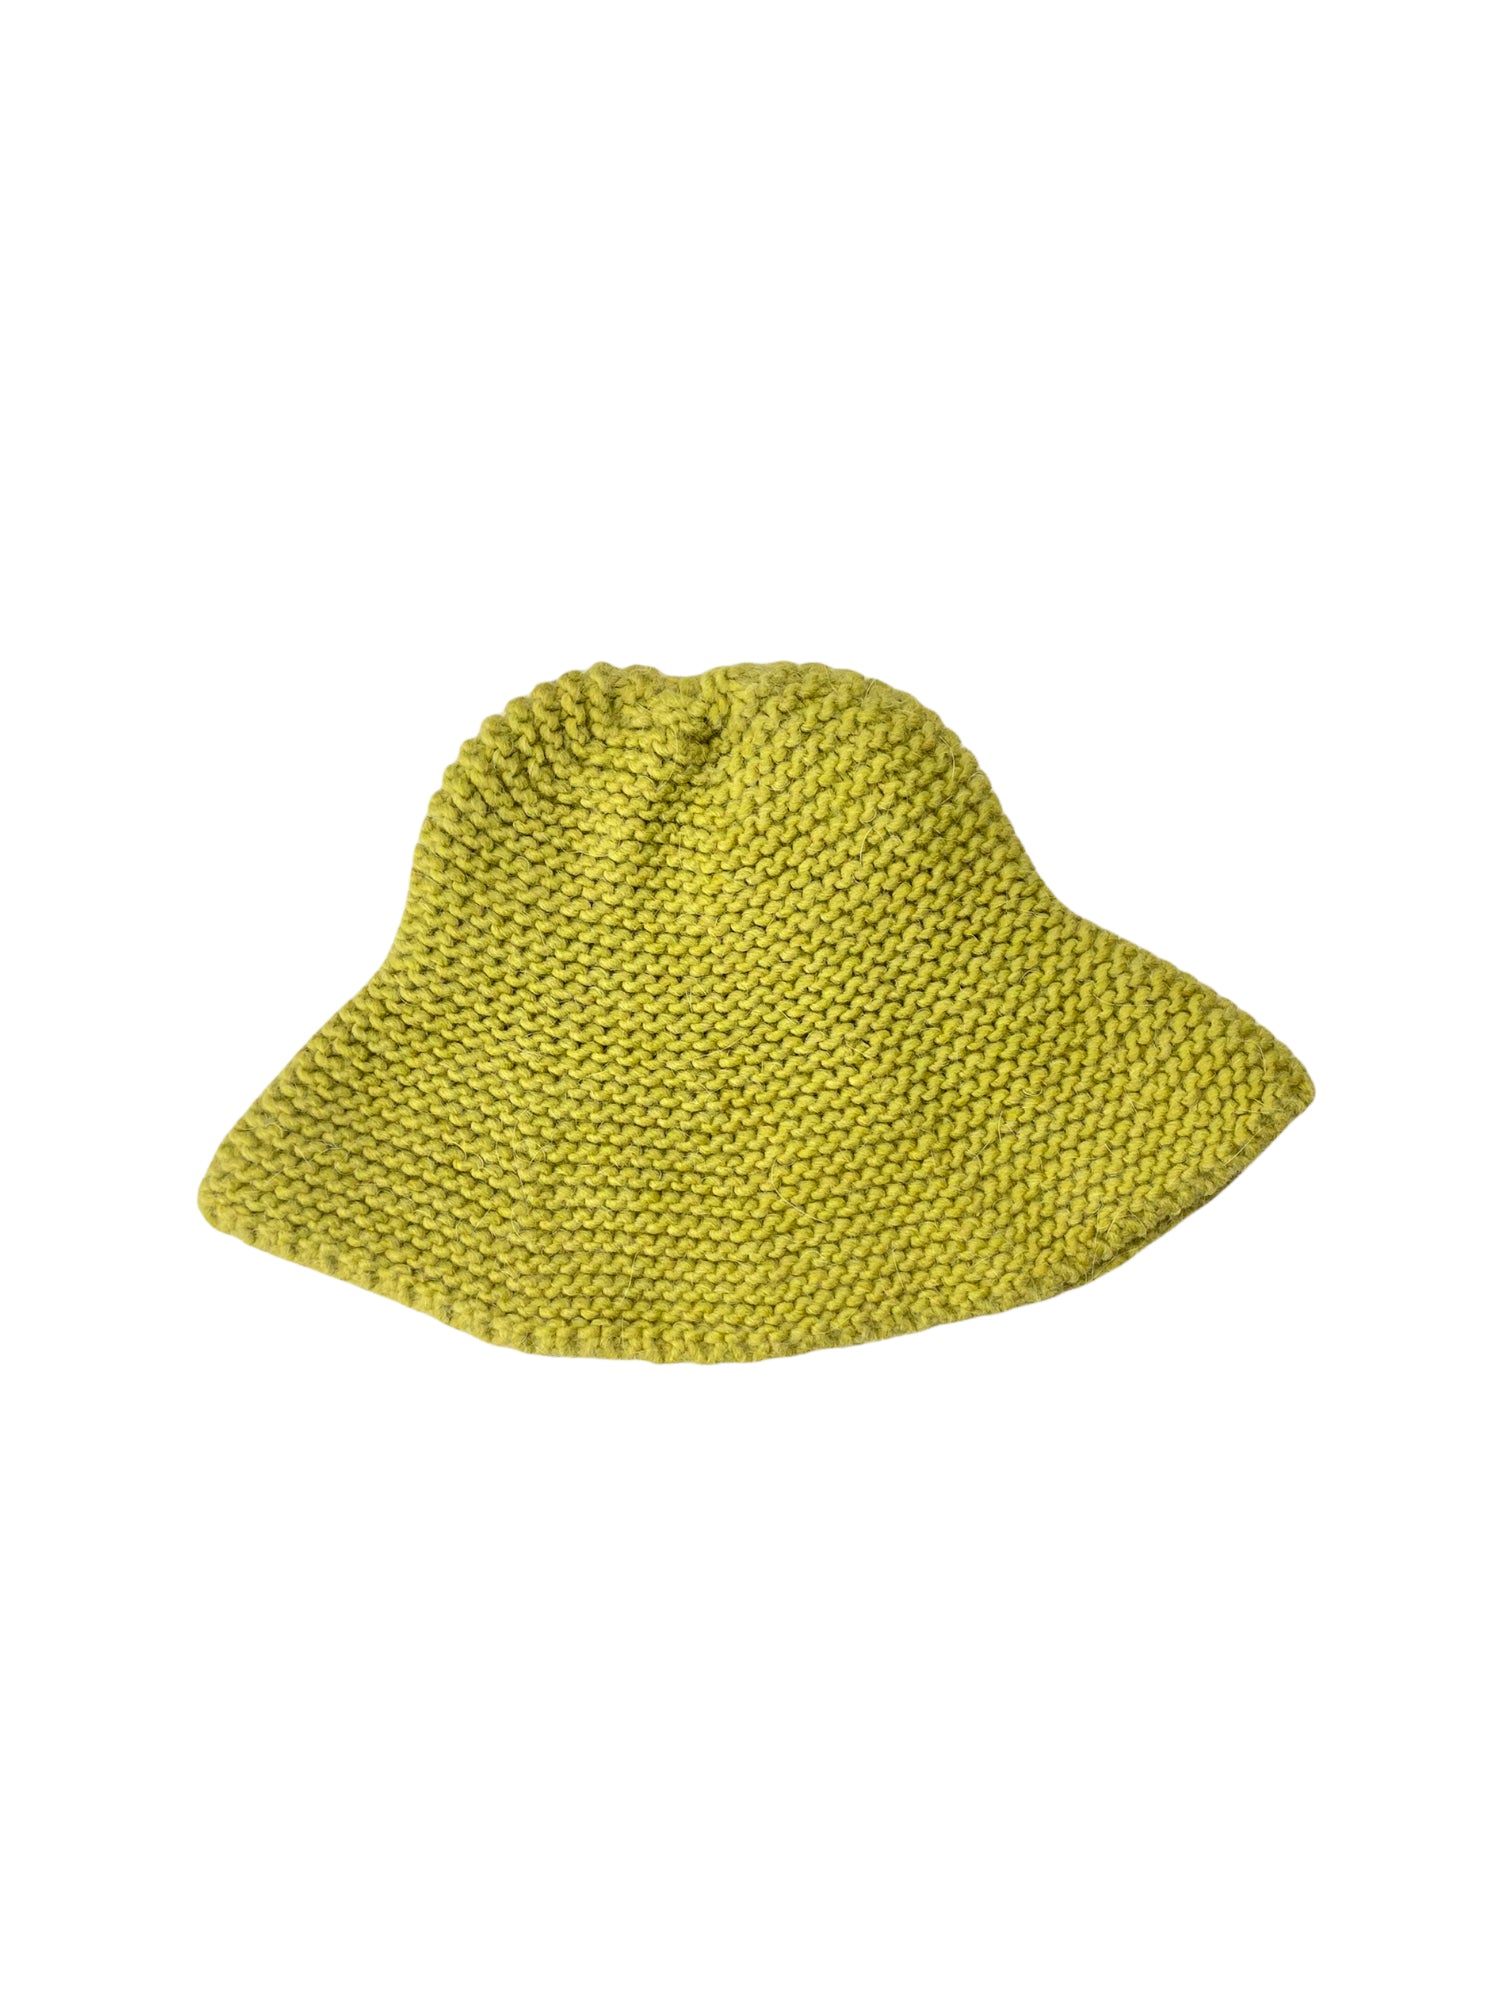 Kontatto green hat